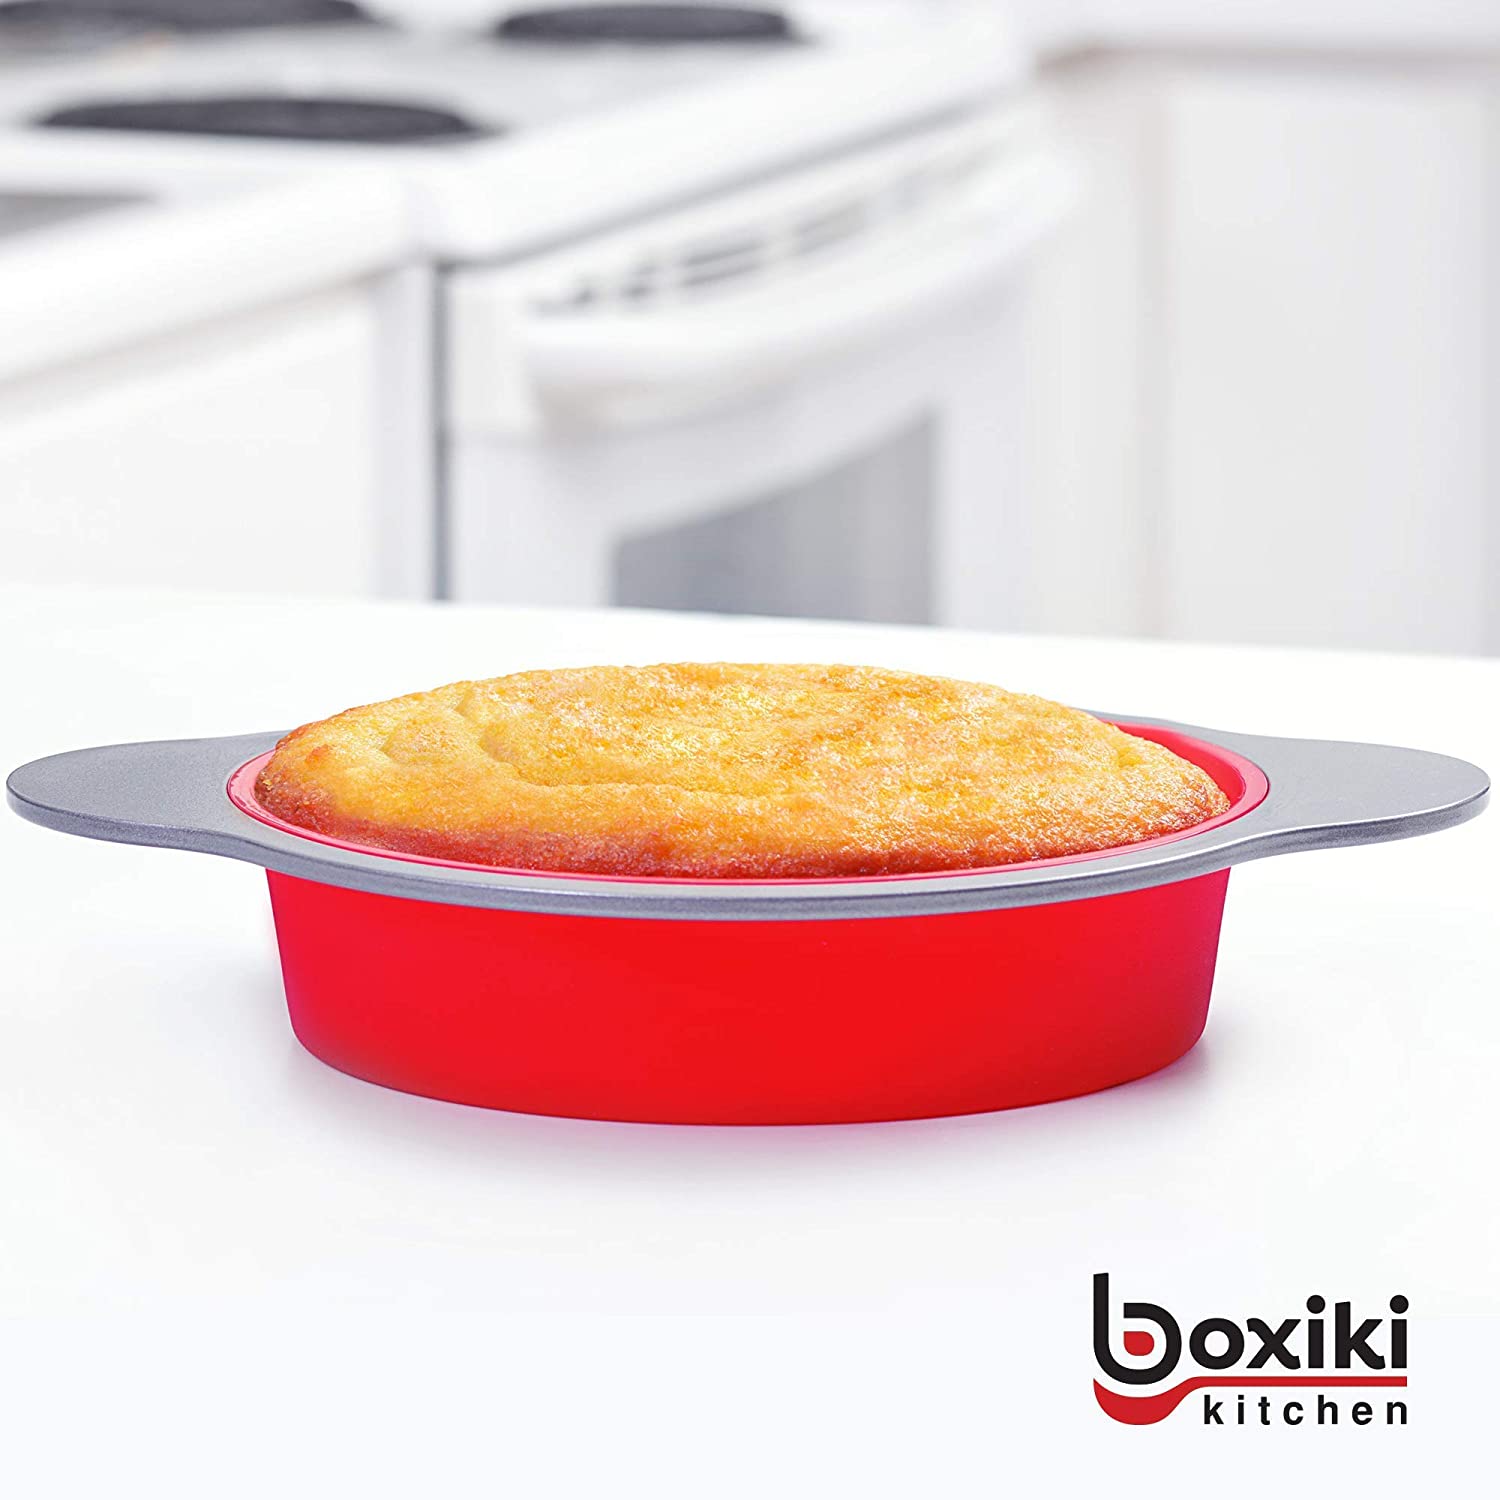 Boxiki Kitchen Silicone Pound Cake Pan, Non-Stick Fluted Cake Pan with  Heavy Grade Steel Frame & Handles